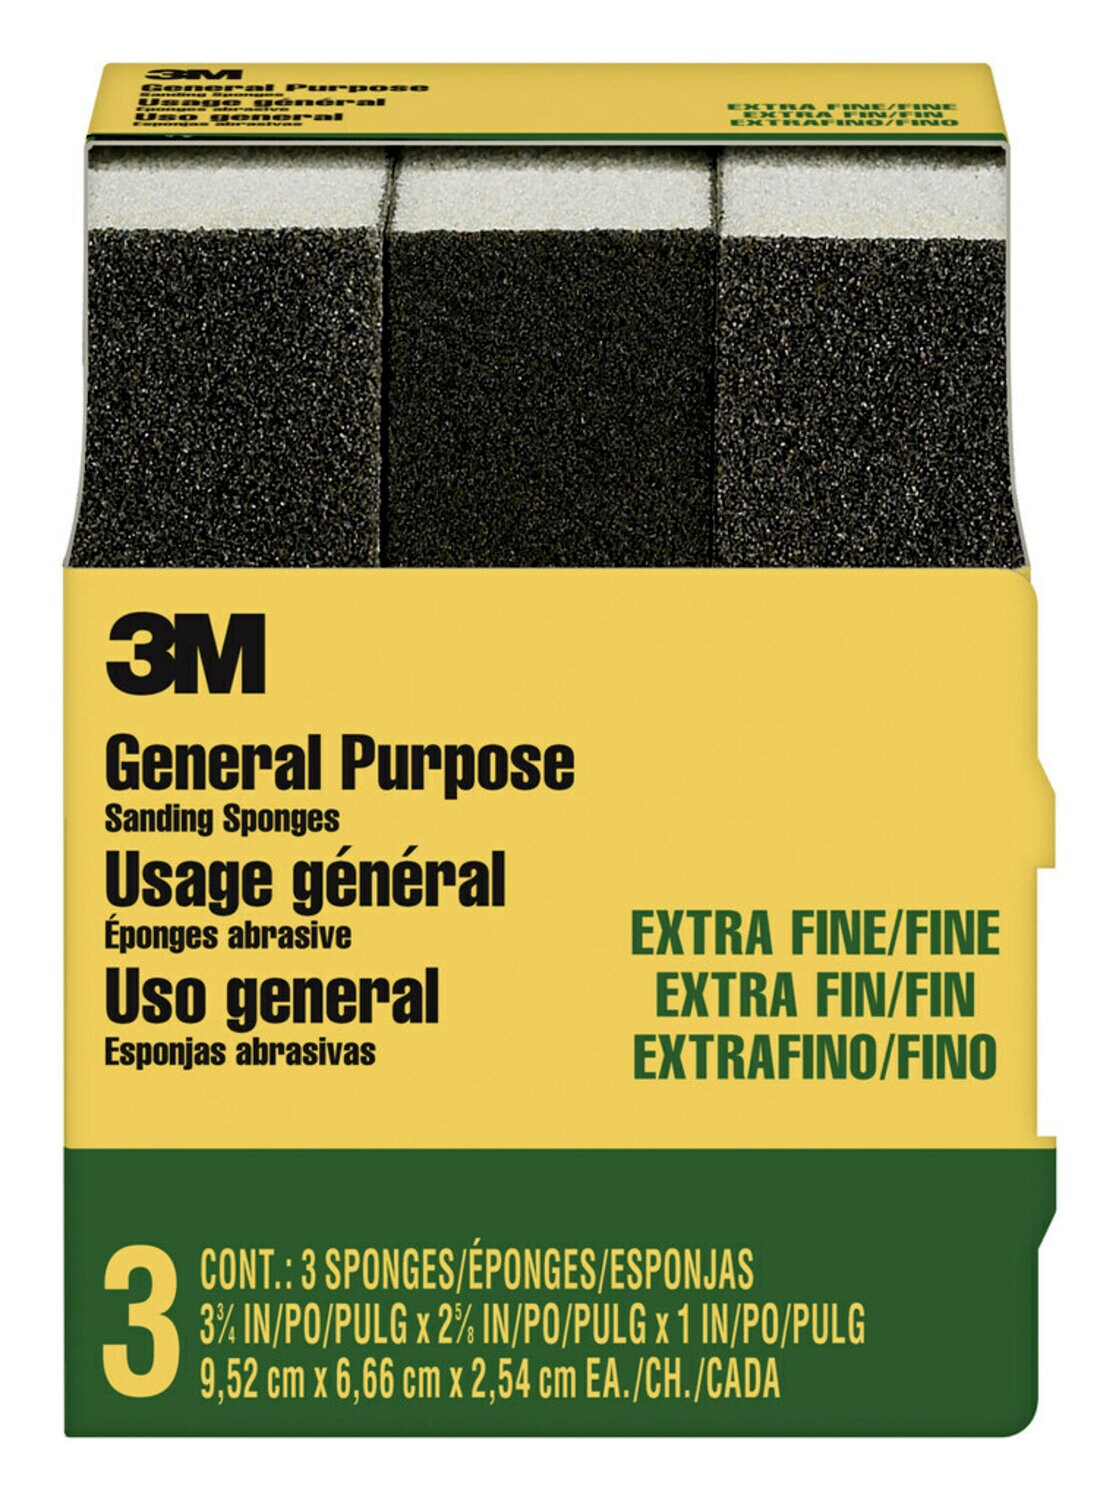 7010335348 - 3M General Purpose Sanding Sponge 907NA-3P-CC, 3 3/4 in x 2 5/8 in x 1 in, Dual Grit, Extra Fine/Fine, 3 spgs/pack, 6 pks/cs